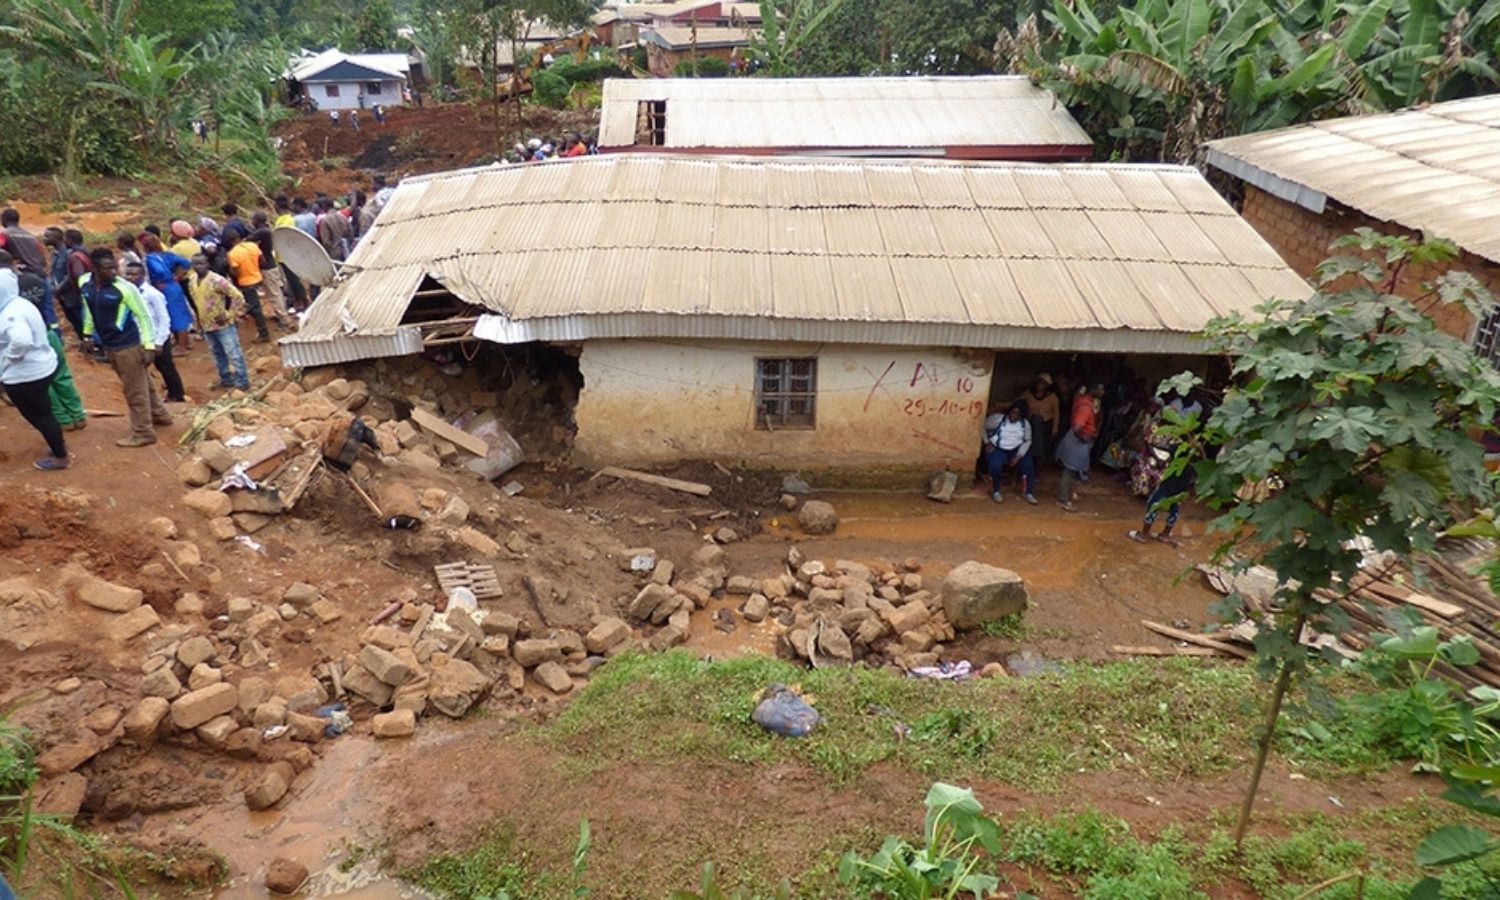 OTD in 2019: 42 people were buried alive in a landslide in Bafoussam